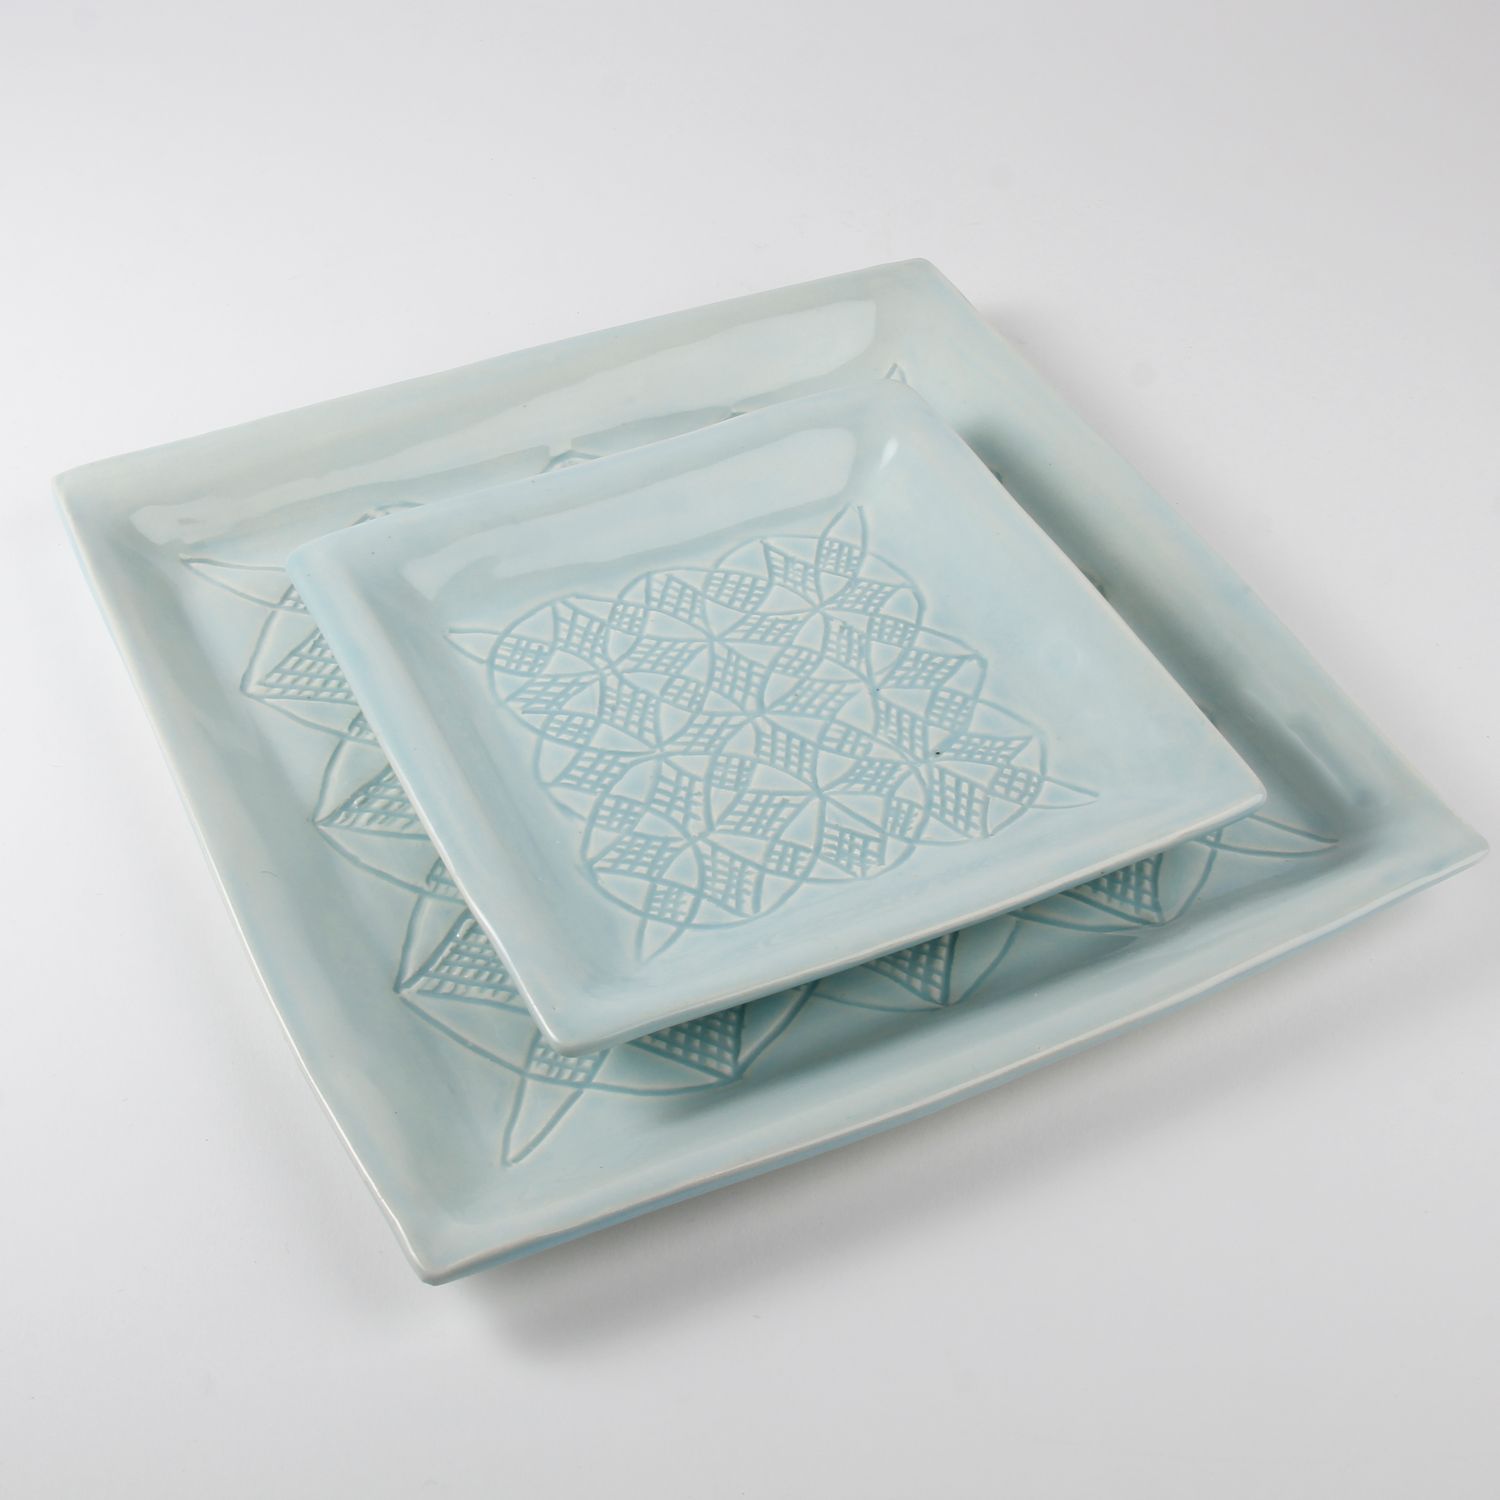 Arlene Kushnir: Large Carved Square Plate – Celadon Product Image 2 of 3